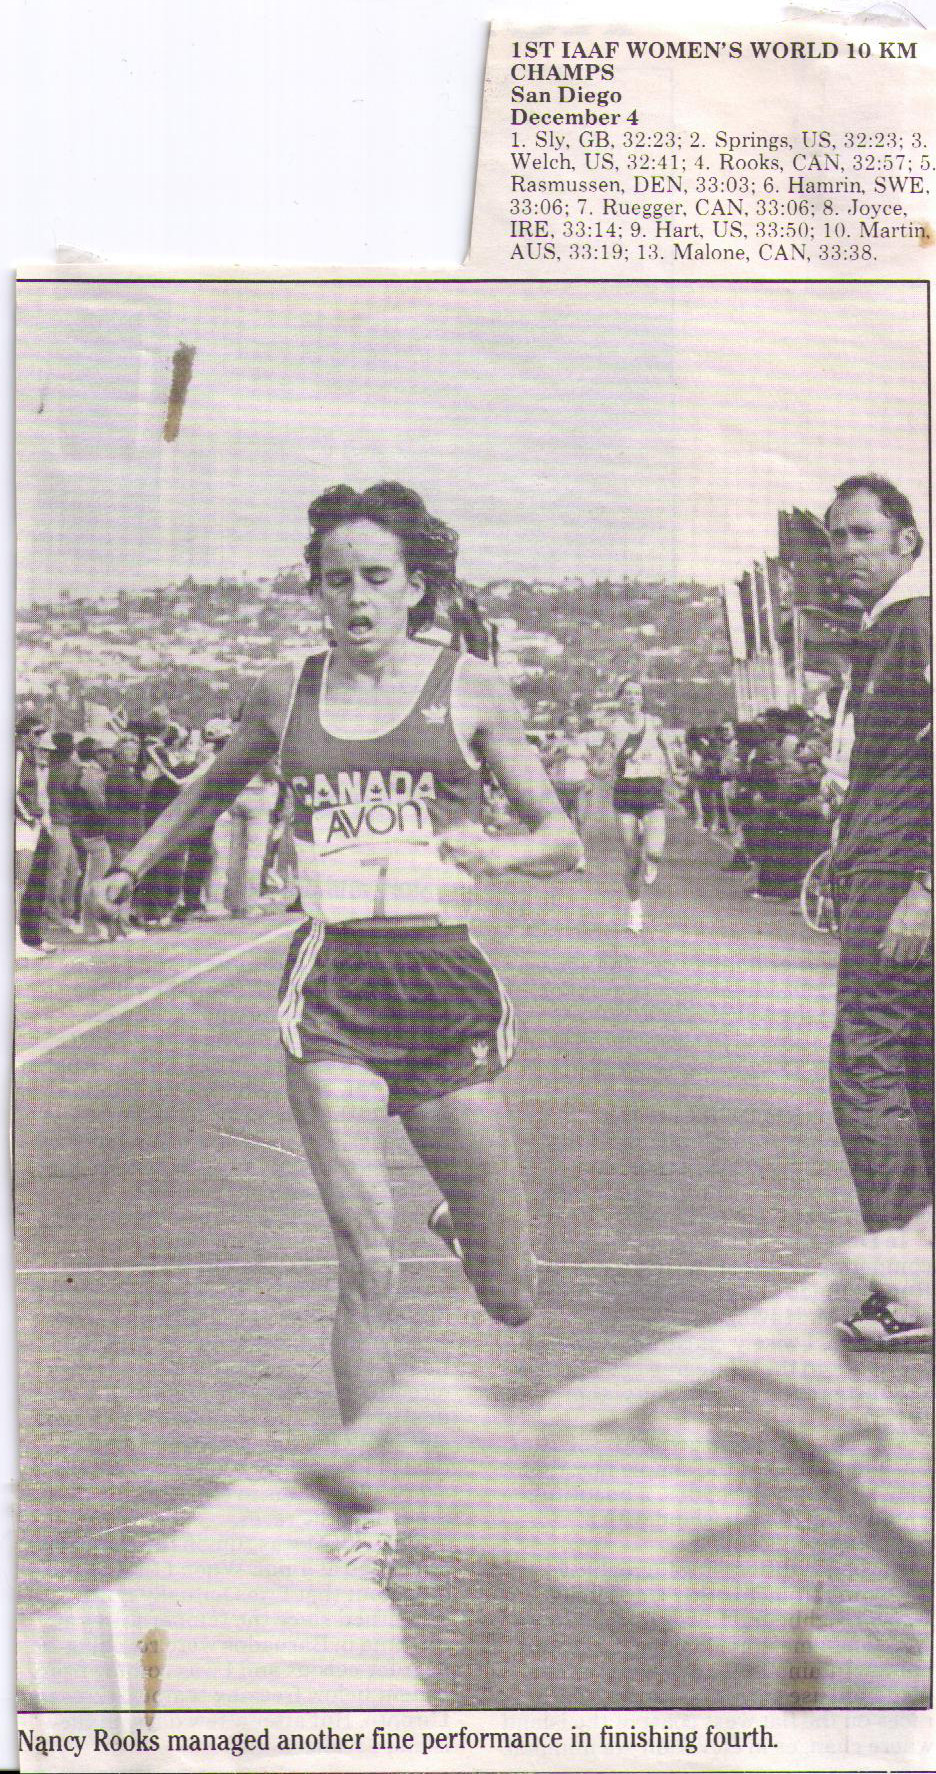 1984 Olympic Marathon Trials